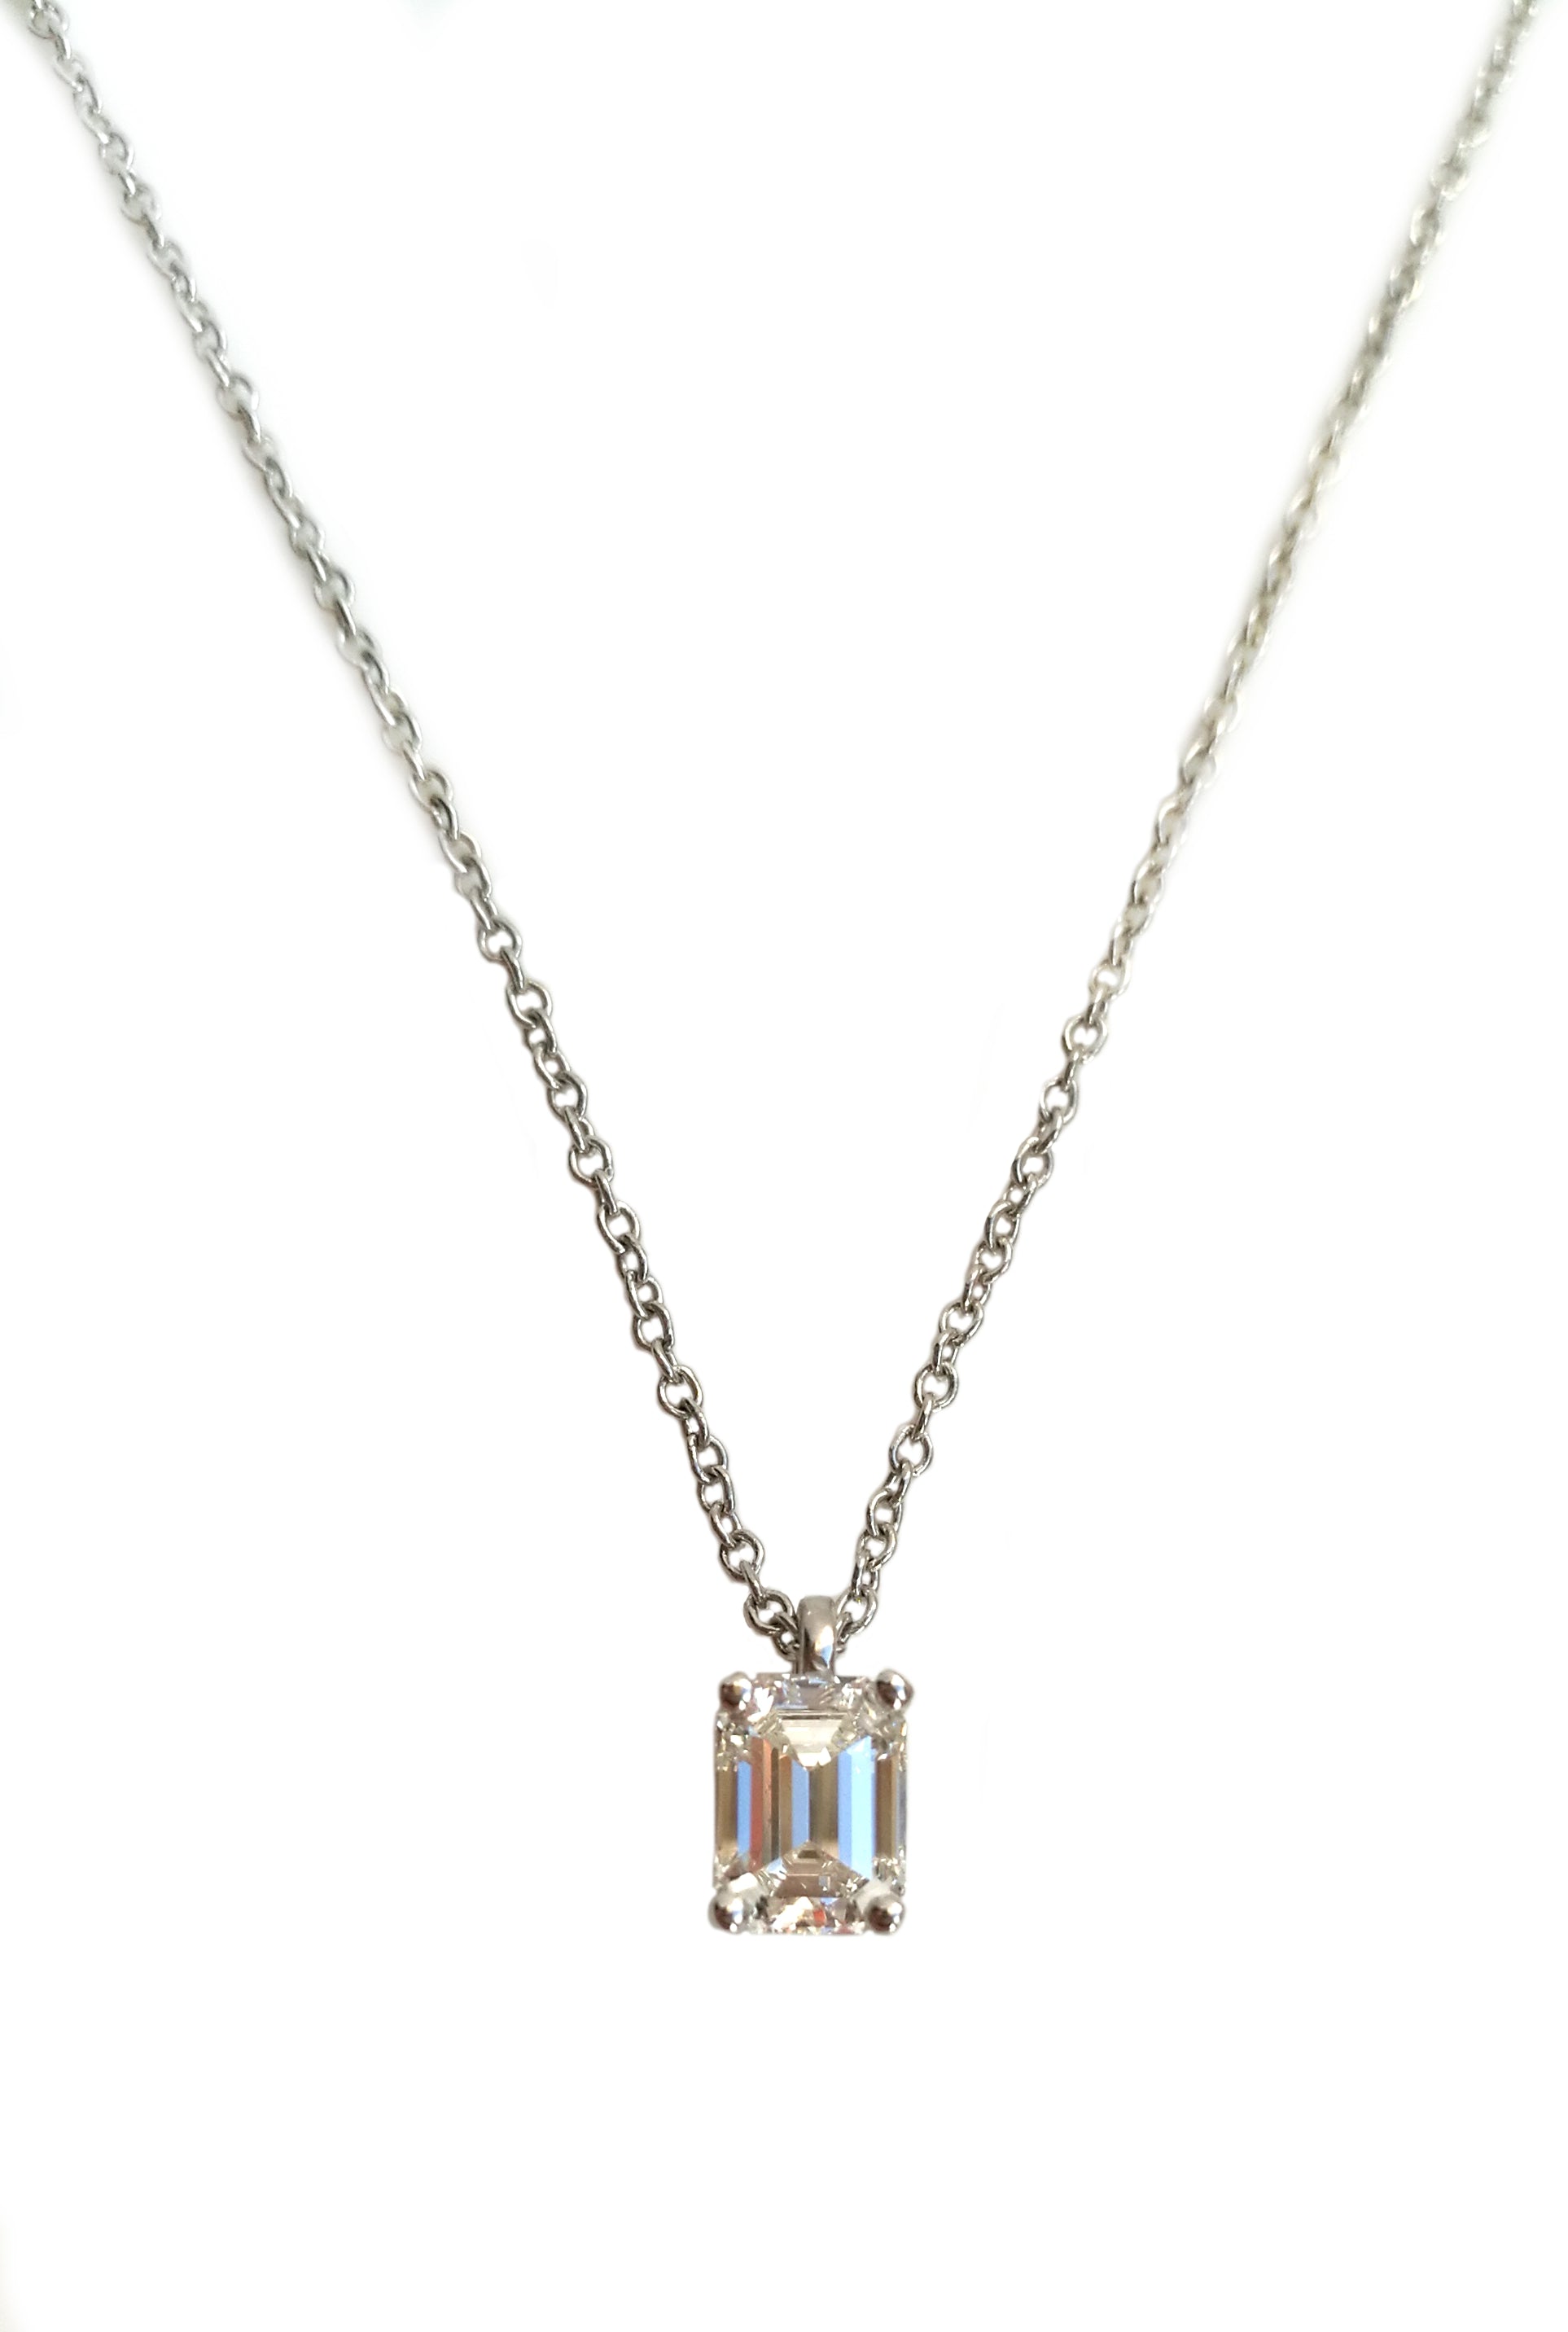 Tiffany & Co .59ct H/VVS1 Emerald Cut Diamond Pendant